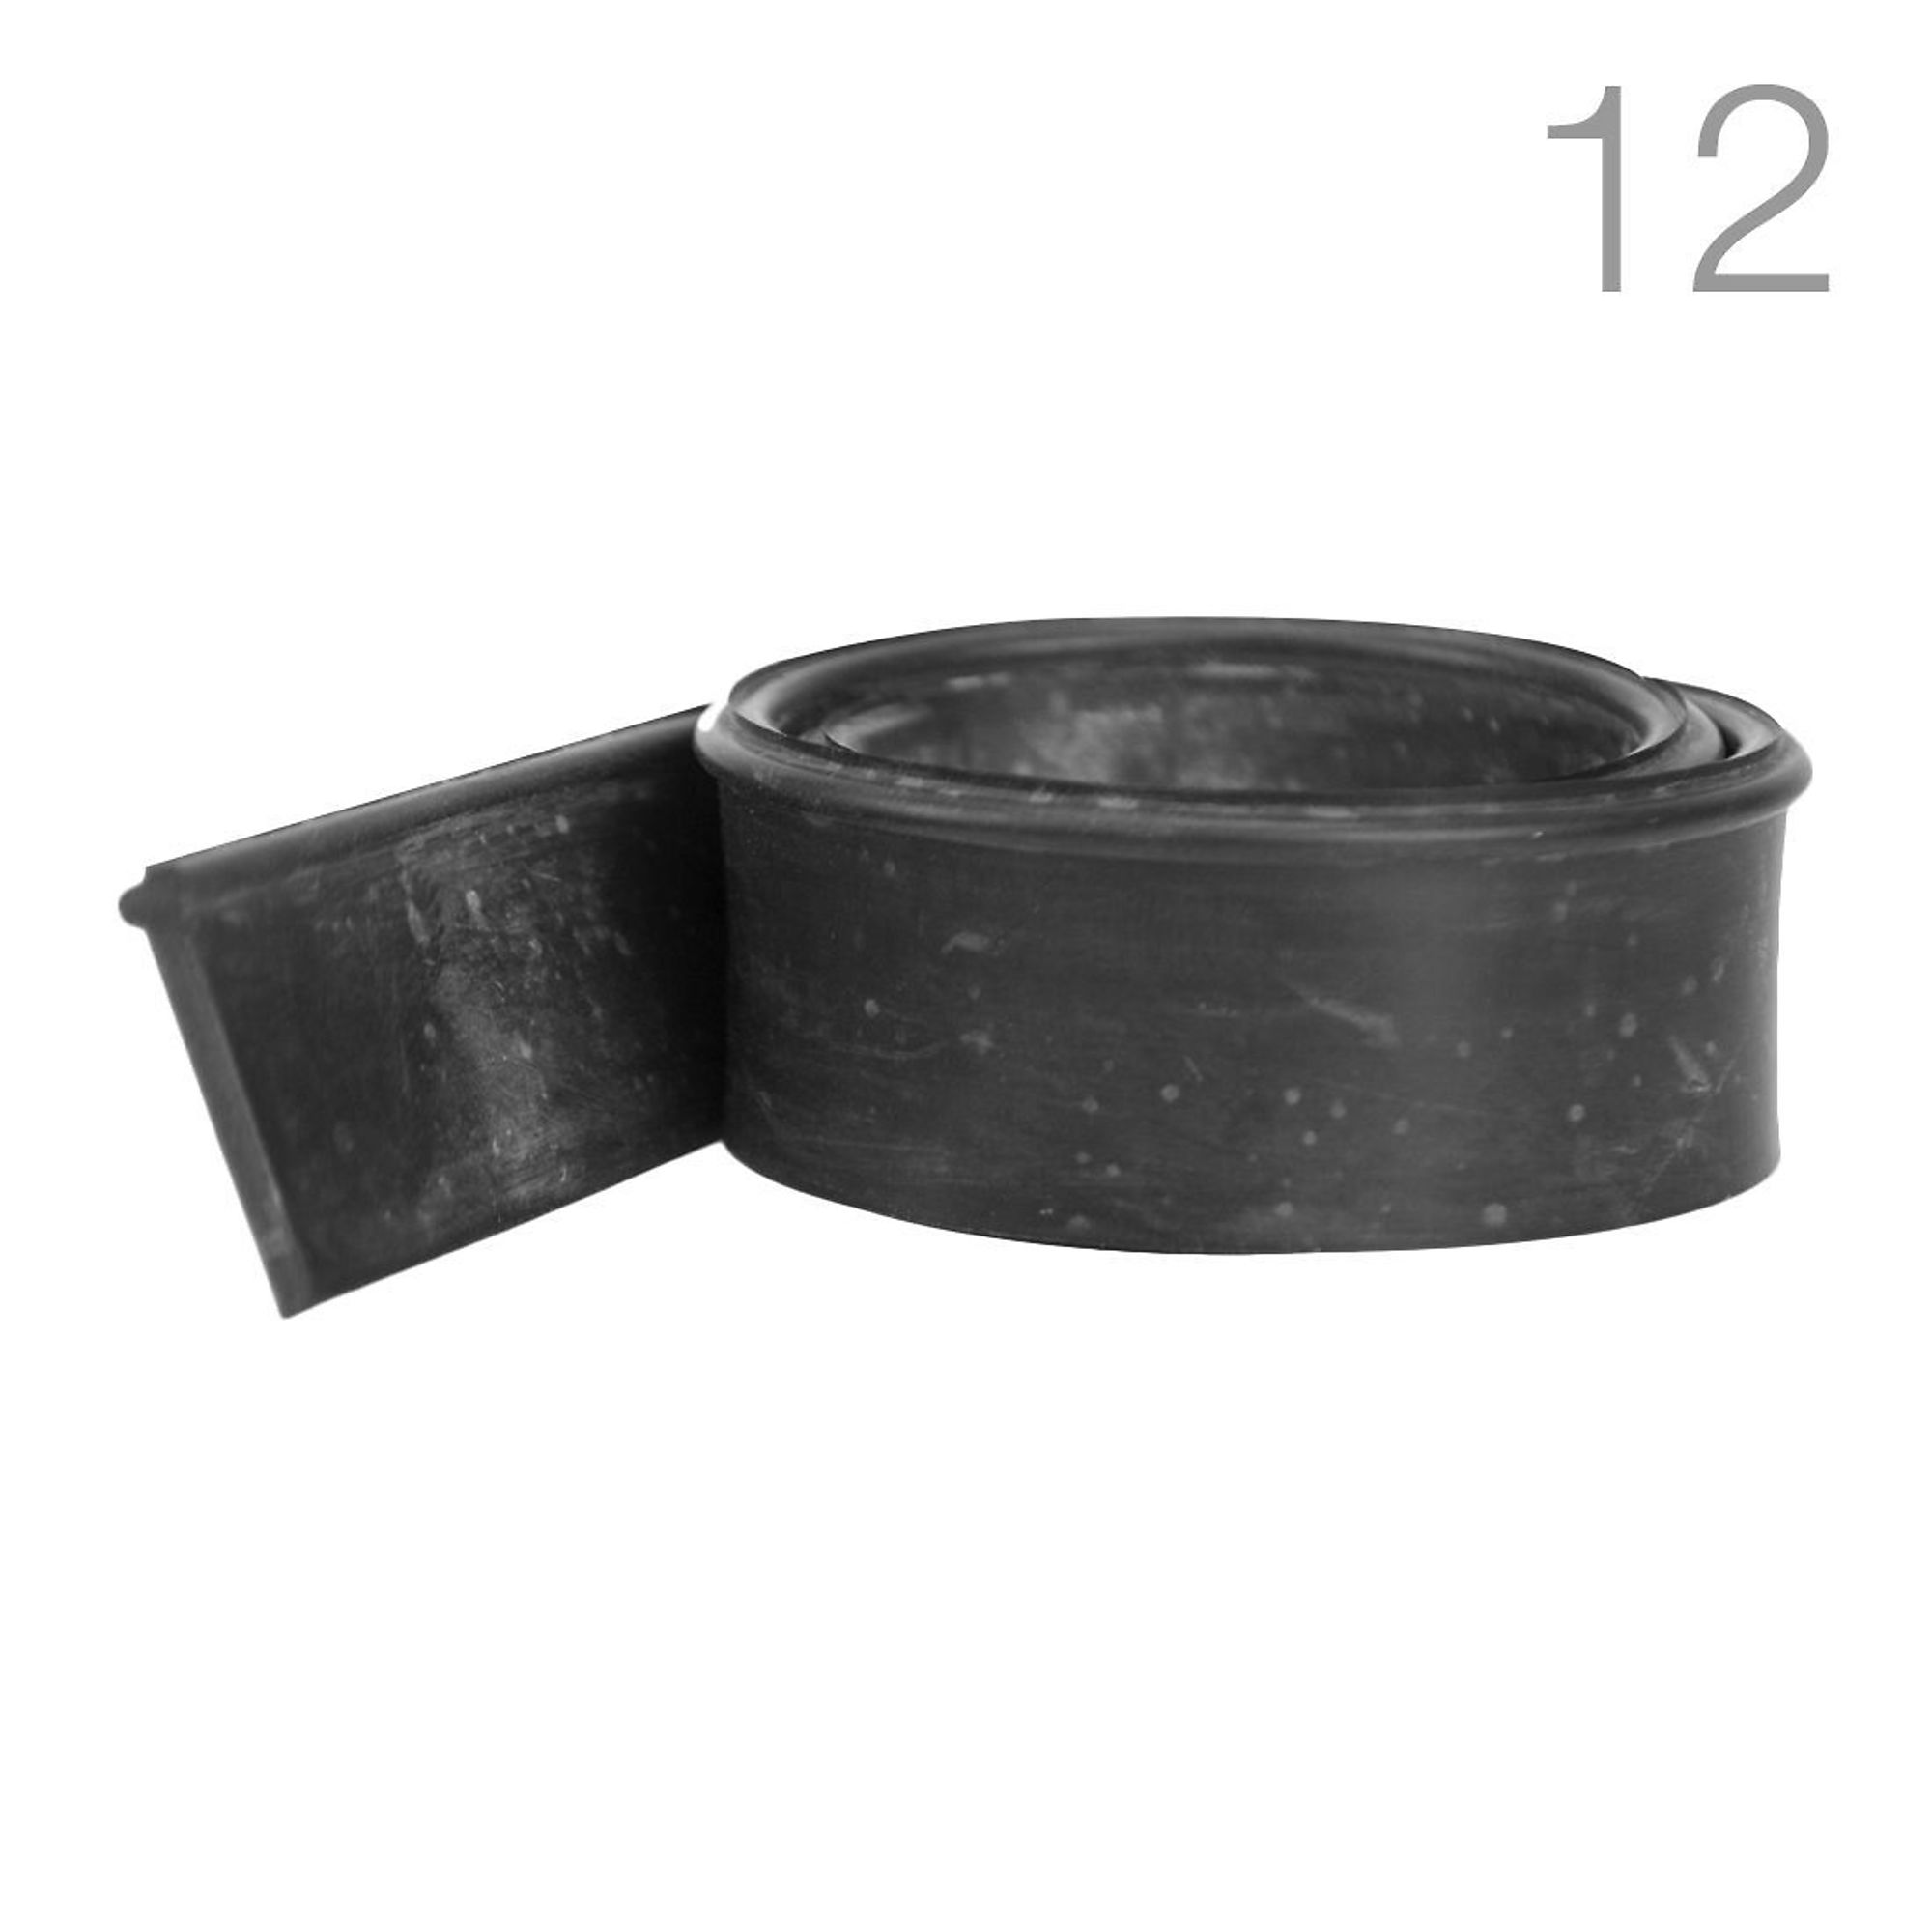 BlackDiamond, Flat Top Medium Squeegee Rubber 12 Pack - 12Inch, Model 012-05-46